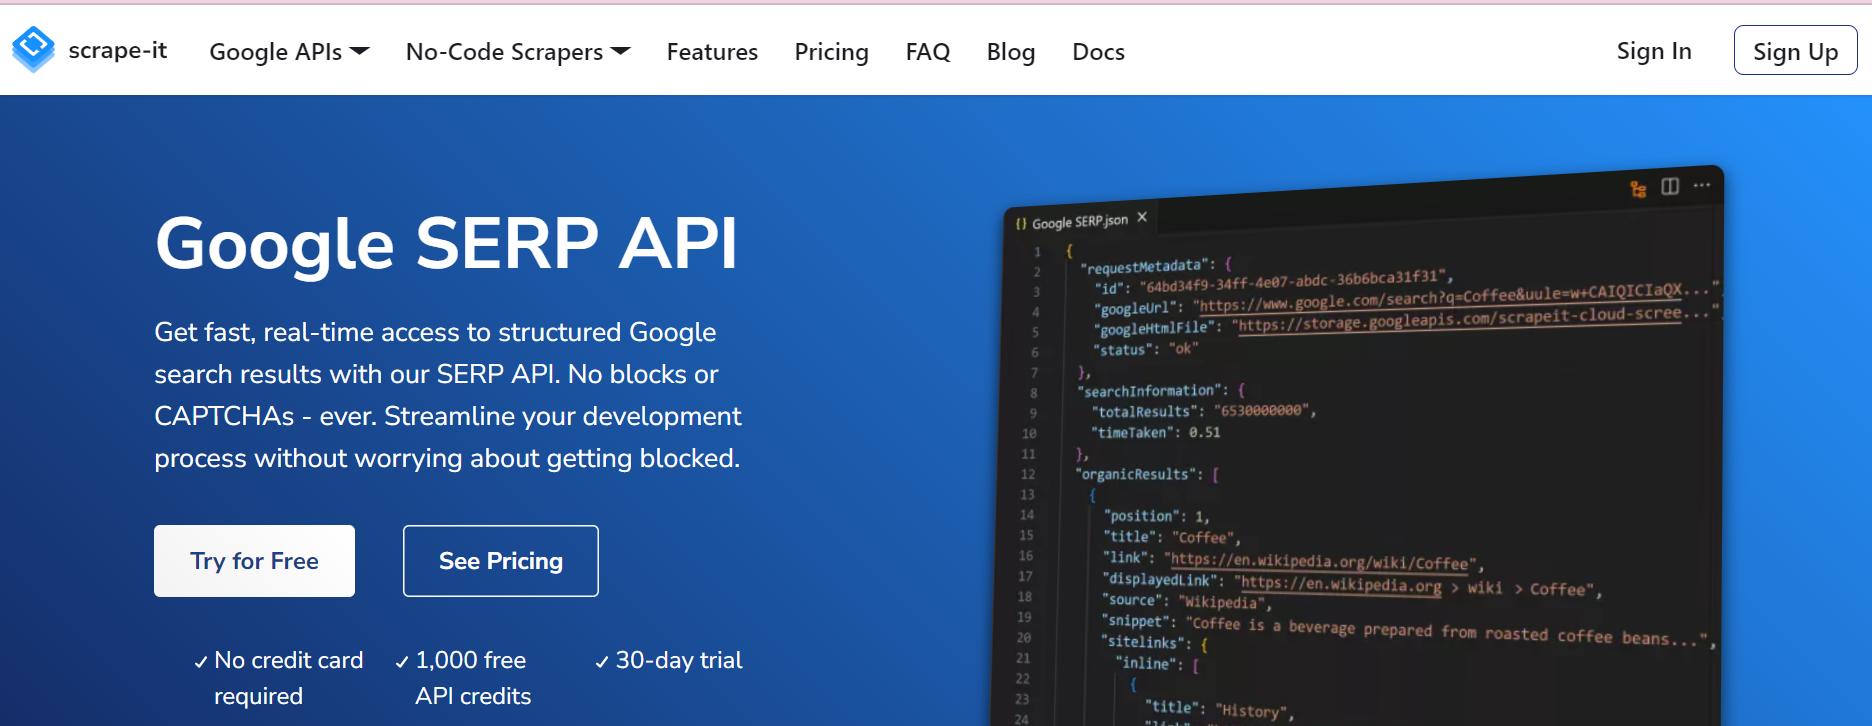 SERP API ของ SCRAPE-IT.CLOUD